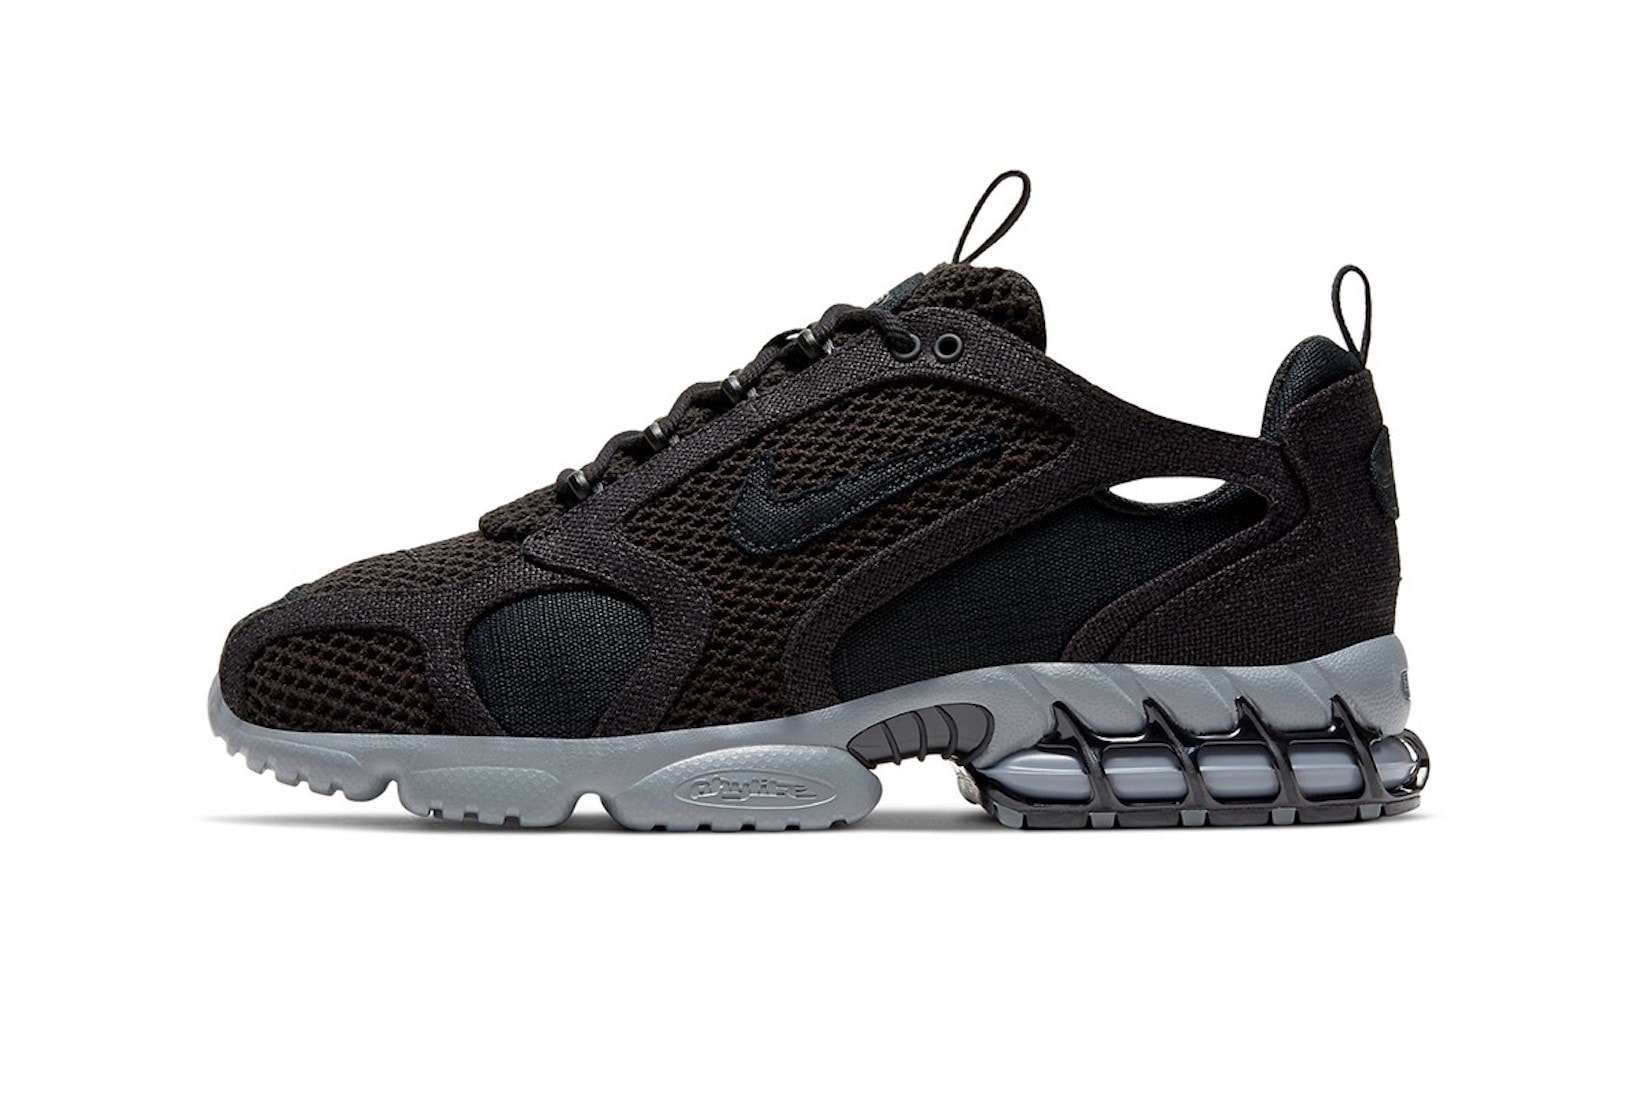 nike stussy air zoom spiridon cage 2 collaboration sneakers black gray sneakerhead footwear shoes